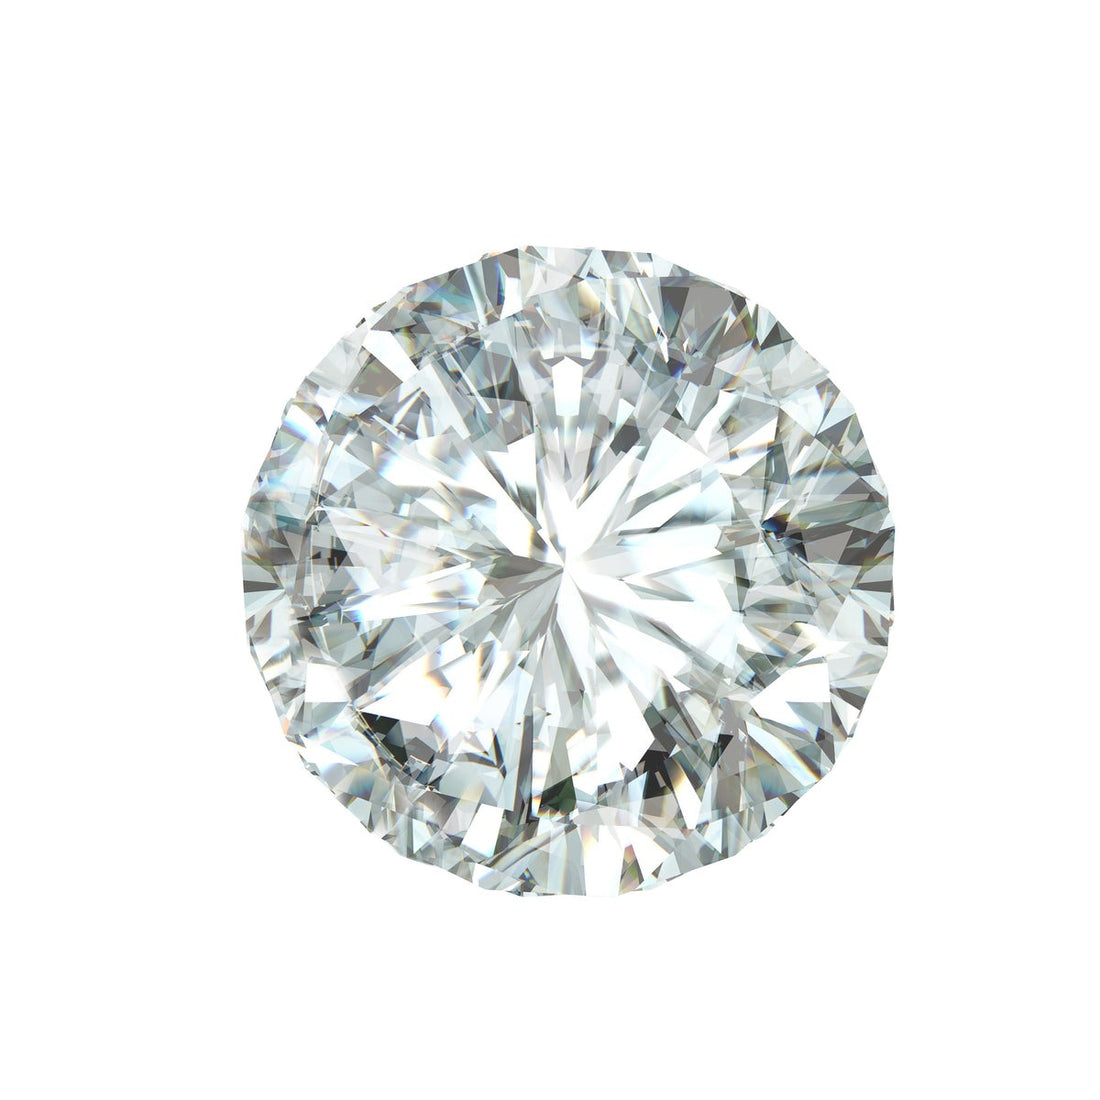 Diamond: Birthstone of April